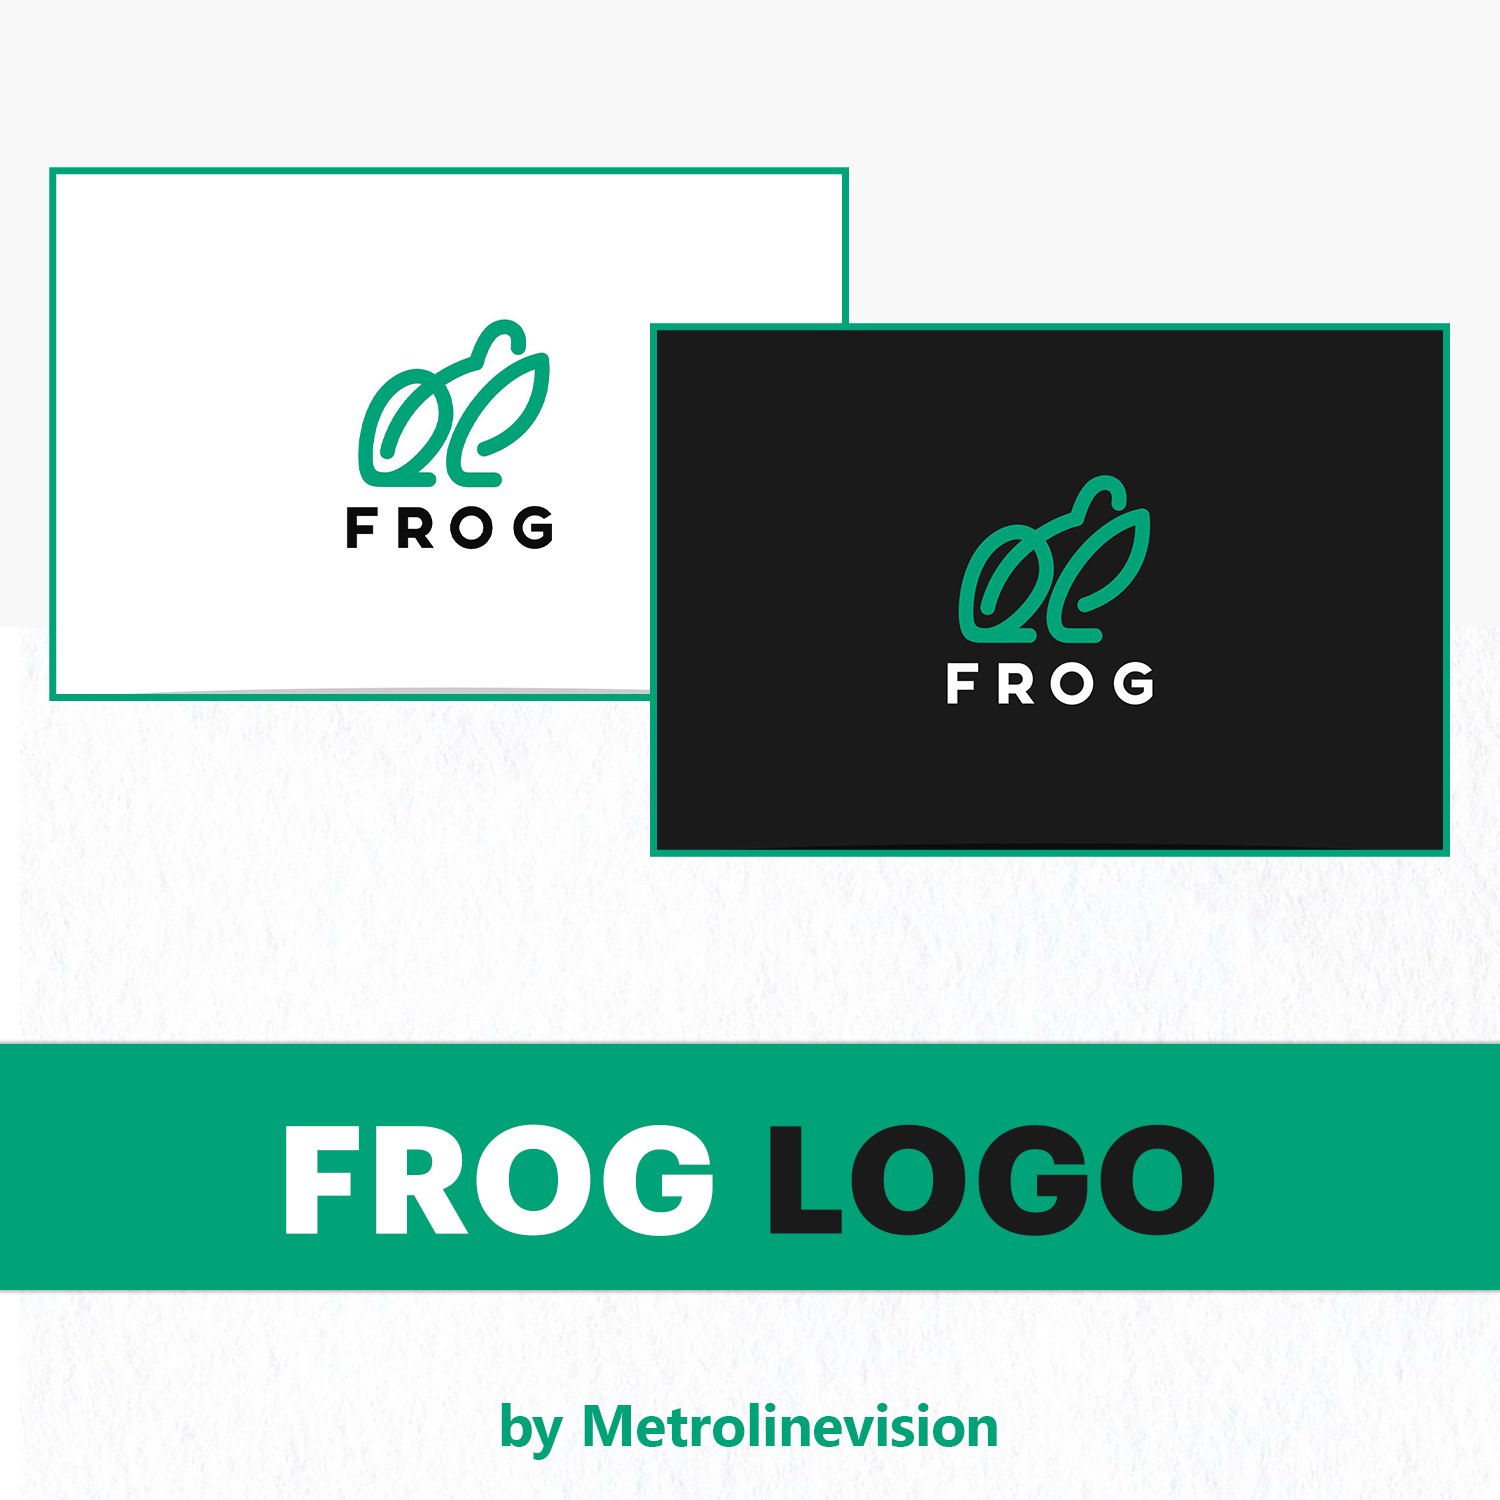 Frog Logo cover.